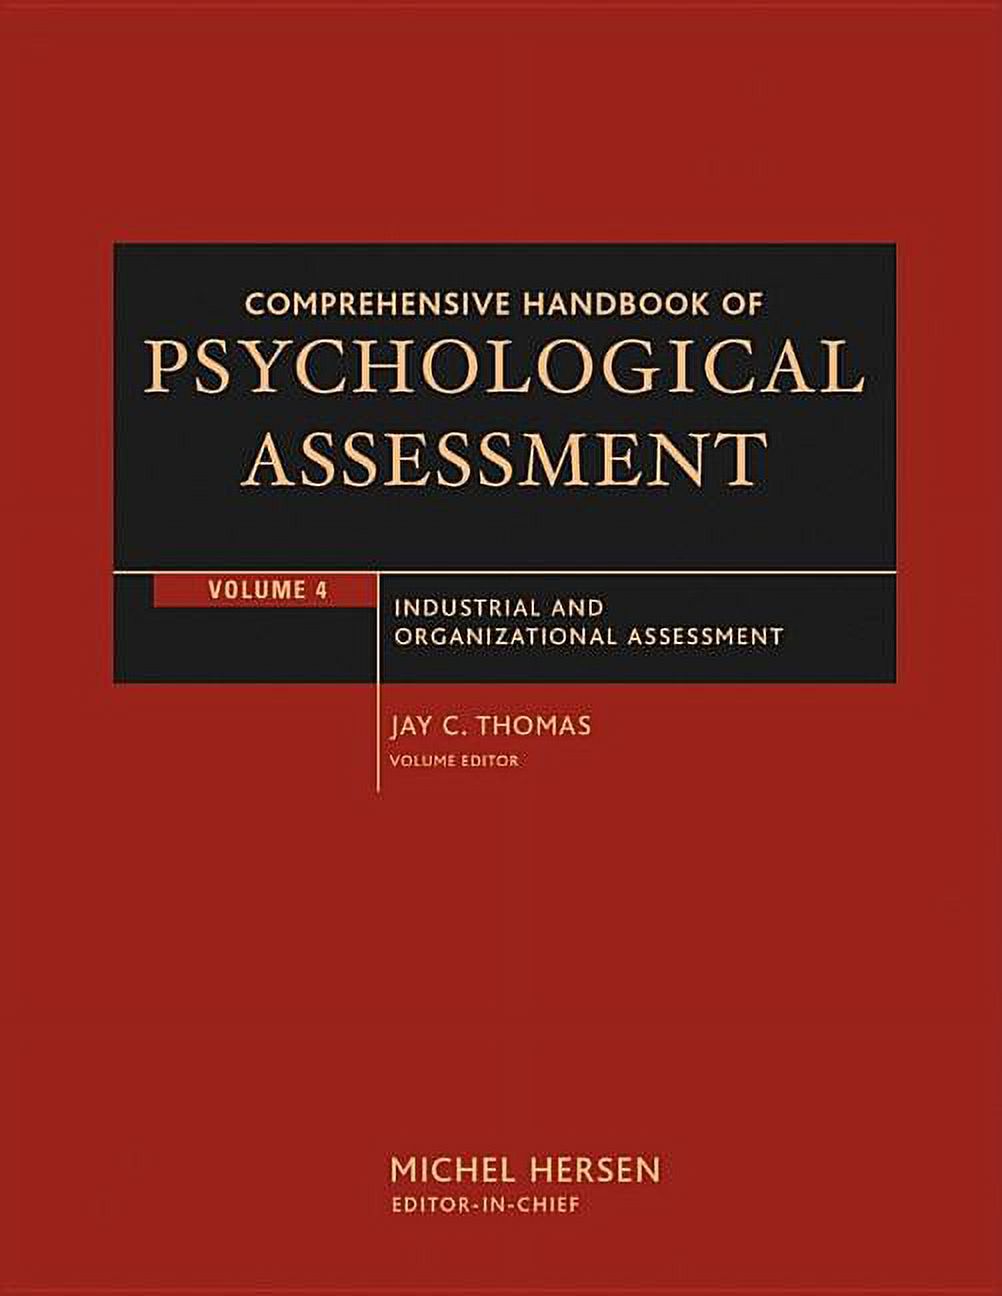 Comprehensive Handbook of Psychological Assessment: Comprehensive Handbook of Psychological Assessment, Volume 4: Industrial and Organizational Assessment (Hardcover) - image 1 of 1